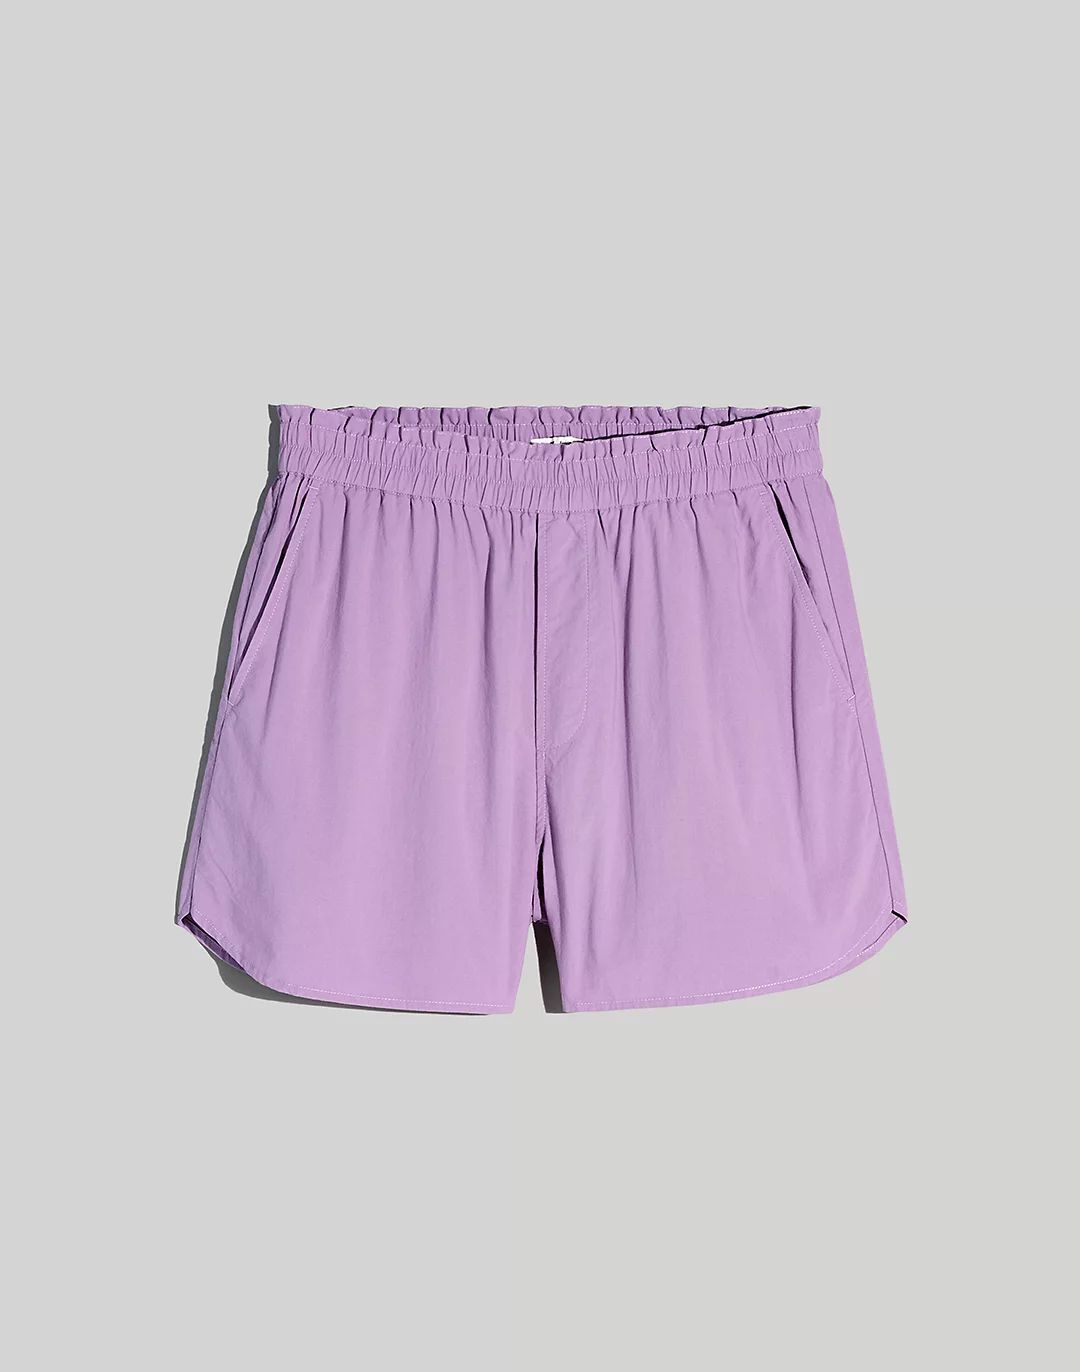 Pull-On Shorts in Signature Poplin | Madewell